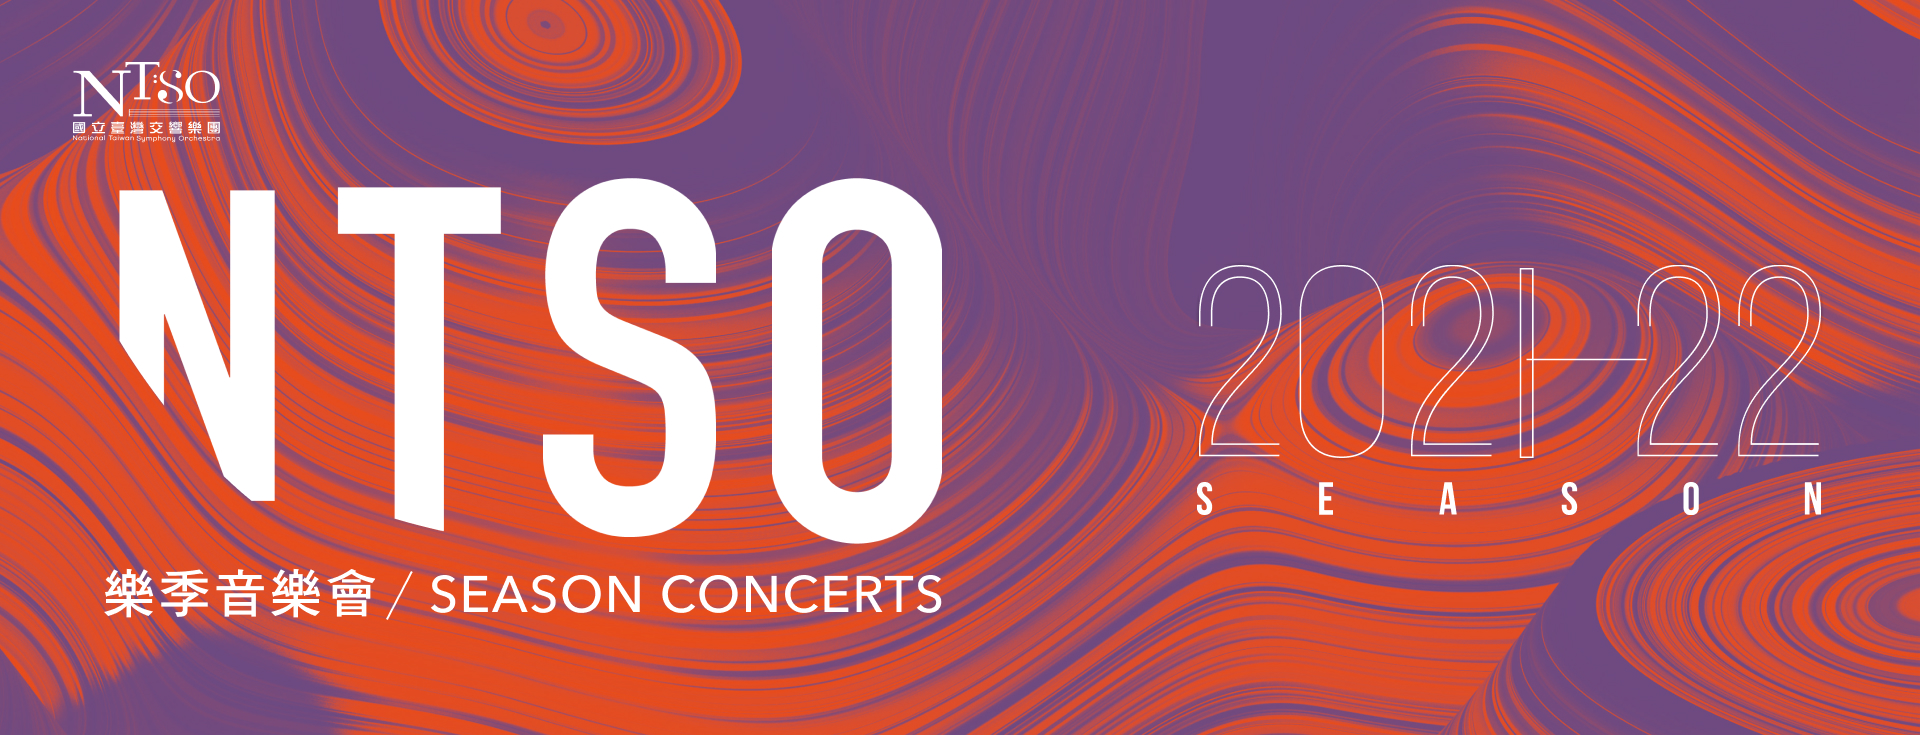 NTSO 2021/22樂季音樂會總覽